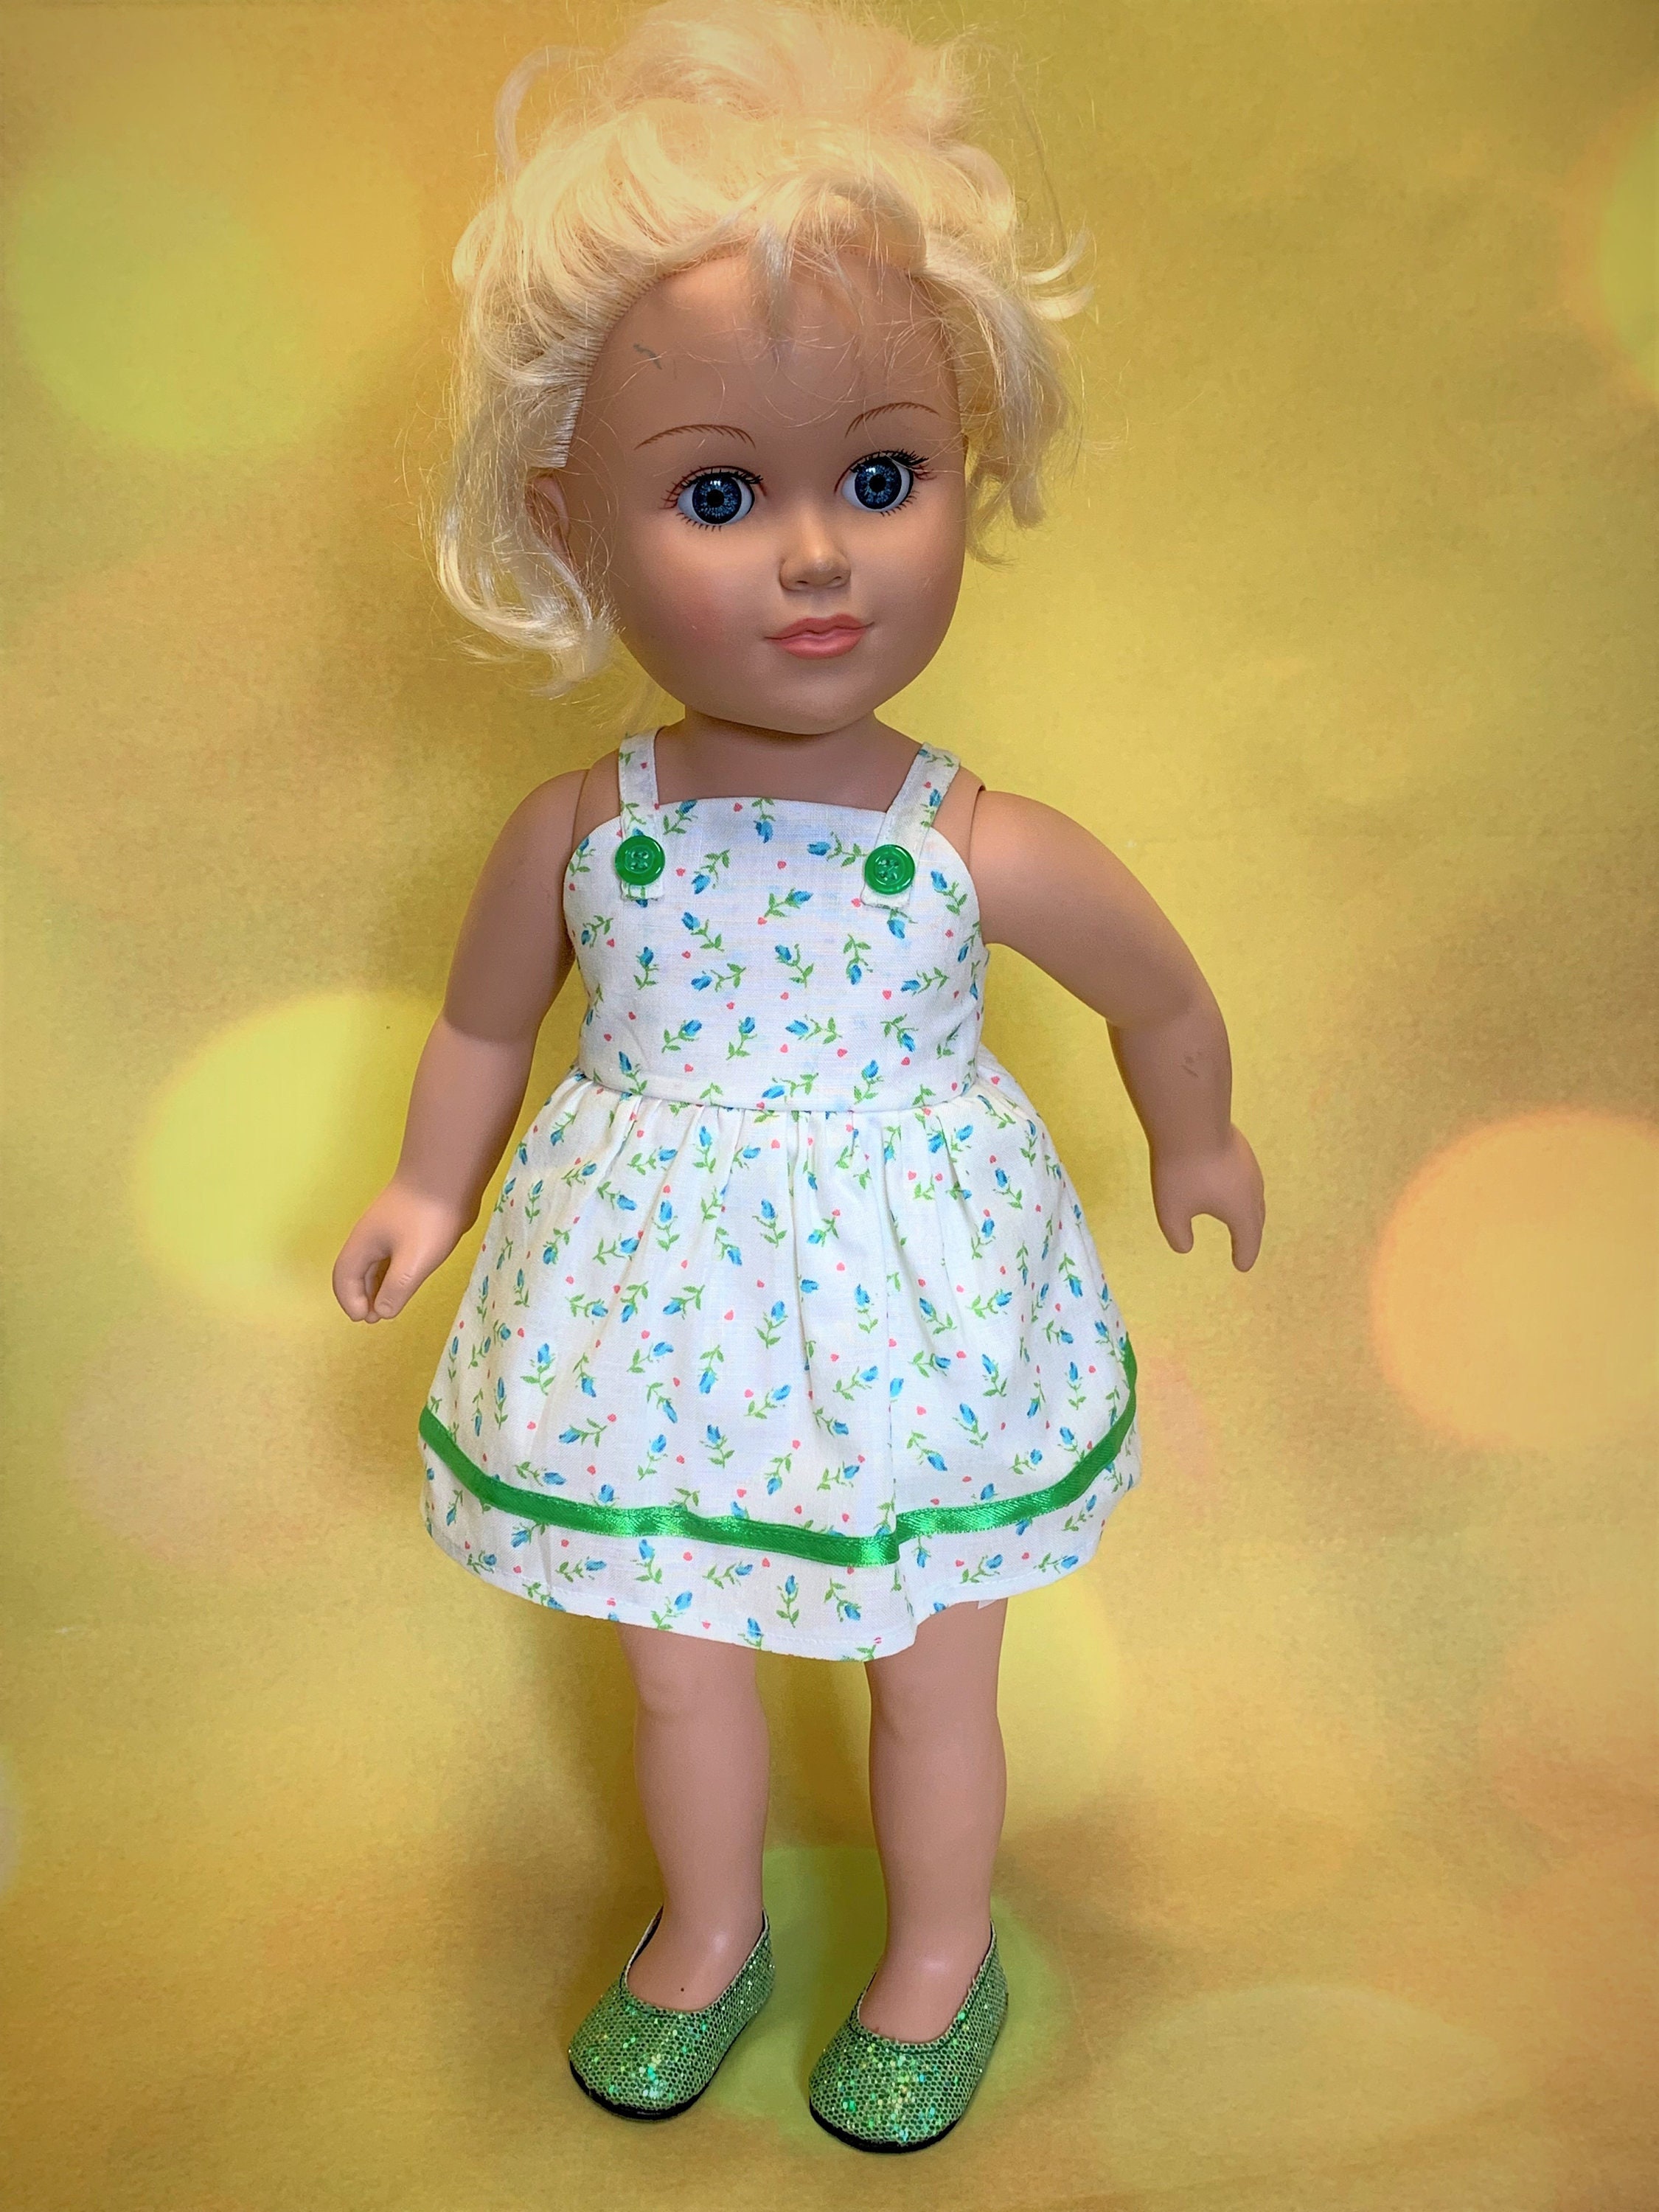 Quero ser Barbie! Fake doll transformation #DIY Julia Beauty 